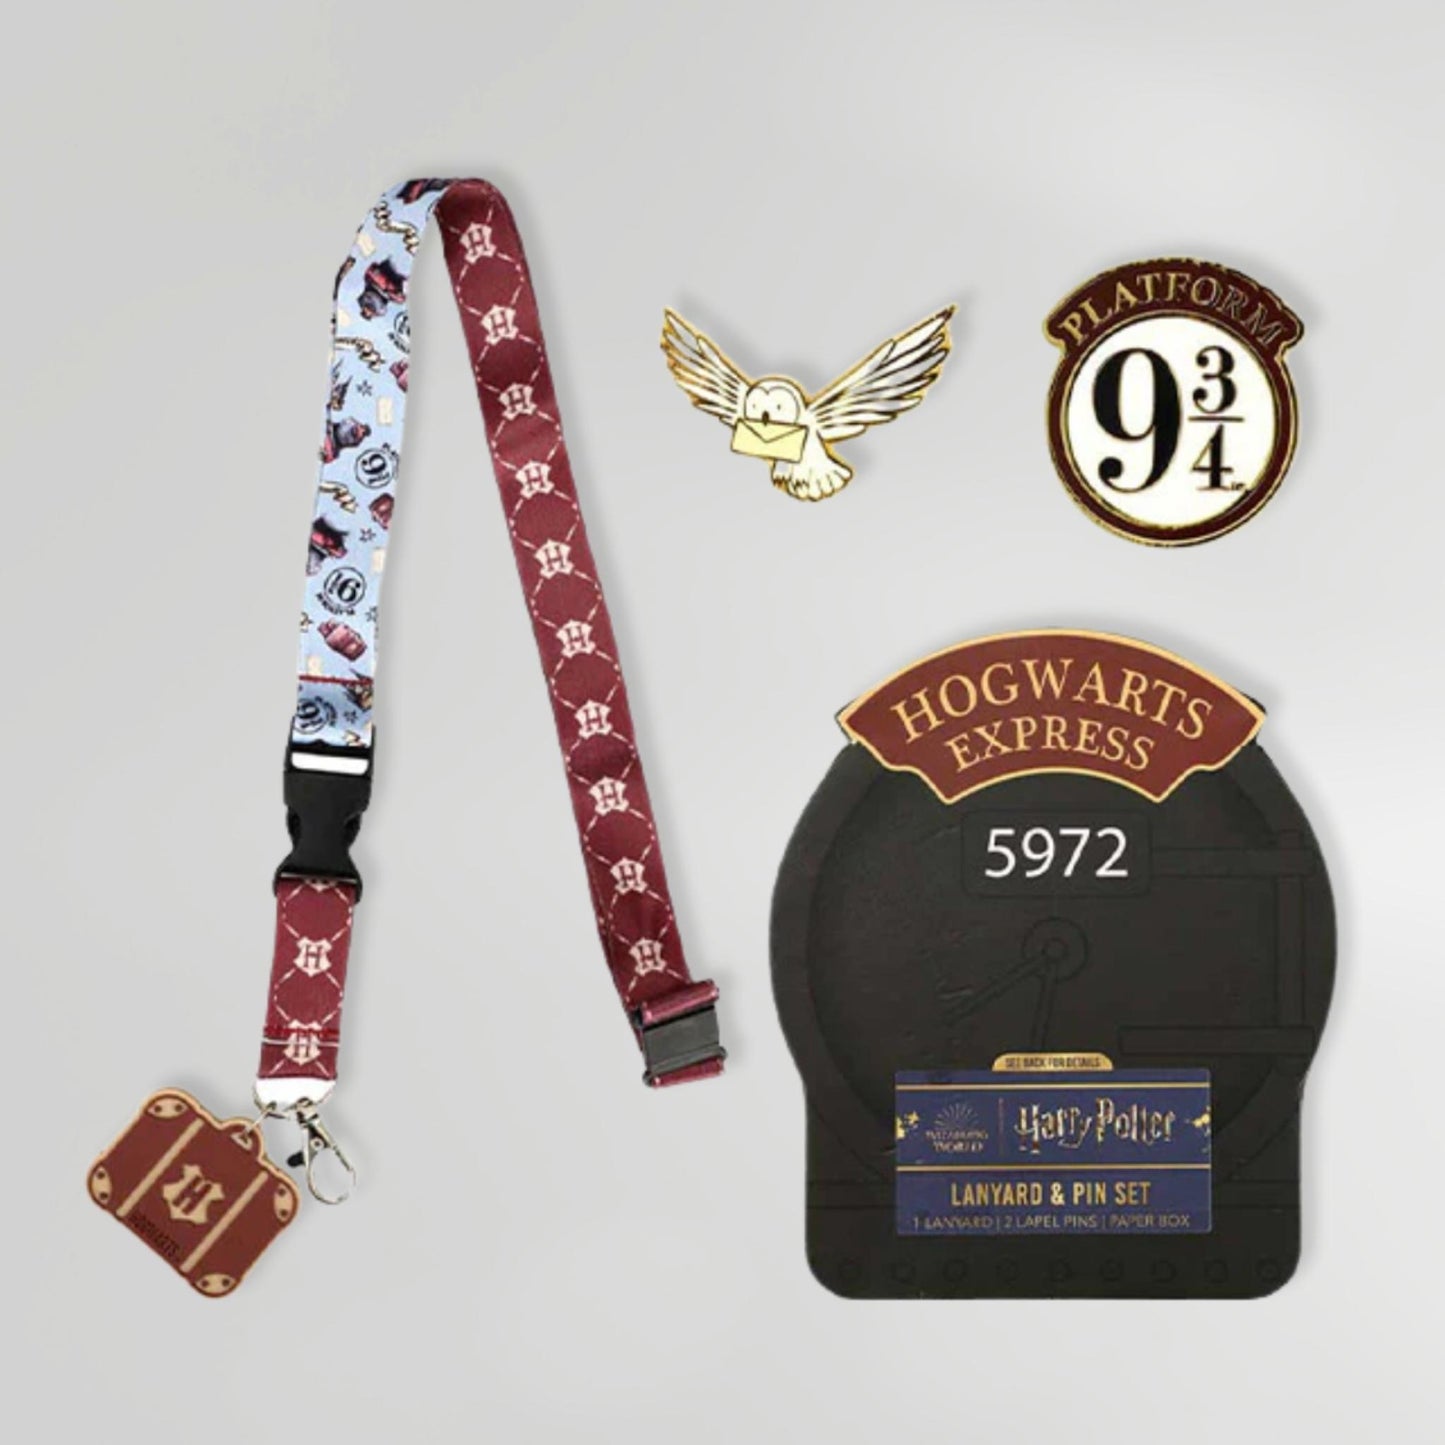 4 Harry Potter Hogwarts Houses Bracelets. Express delivery